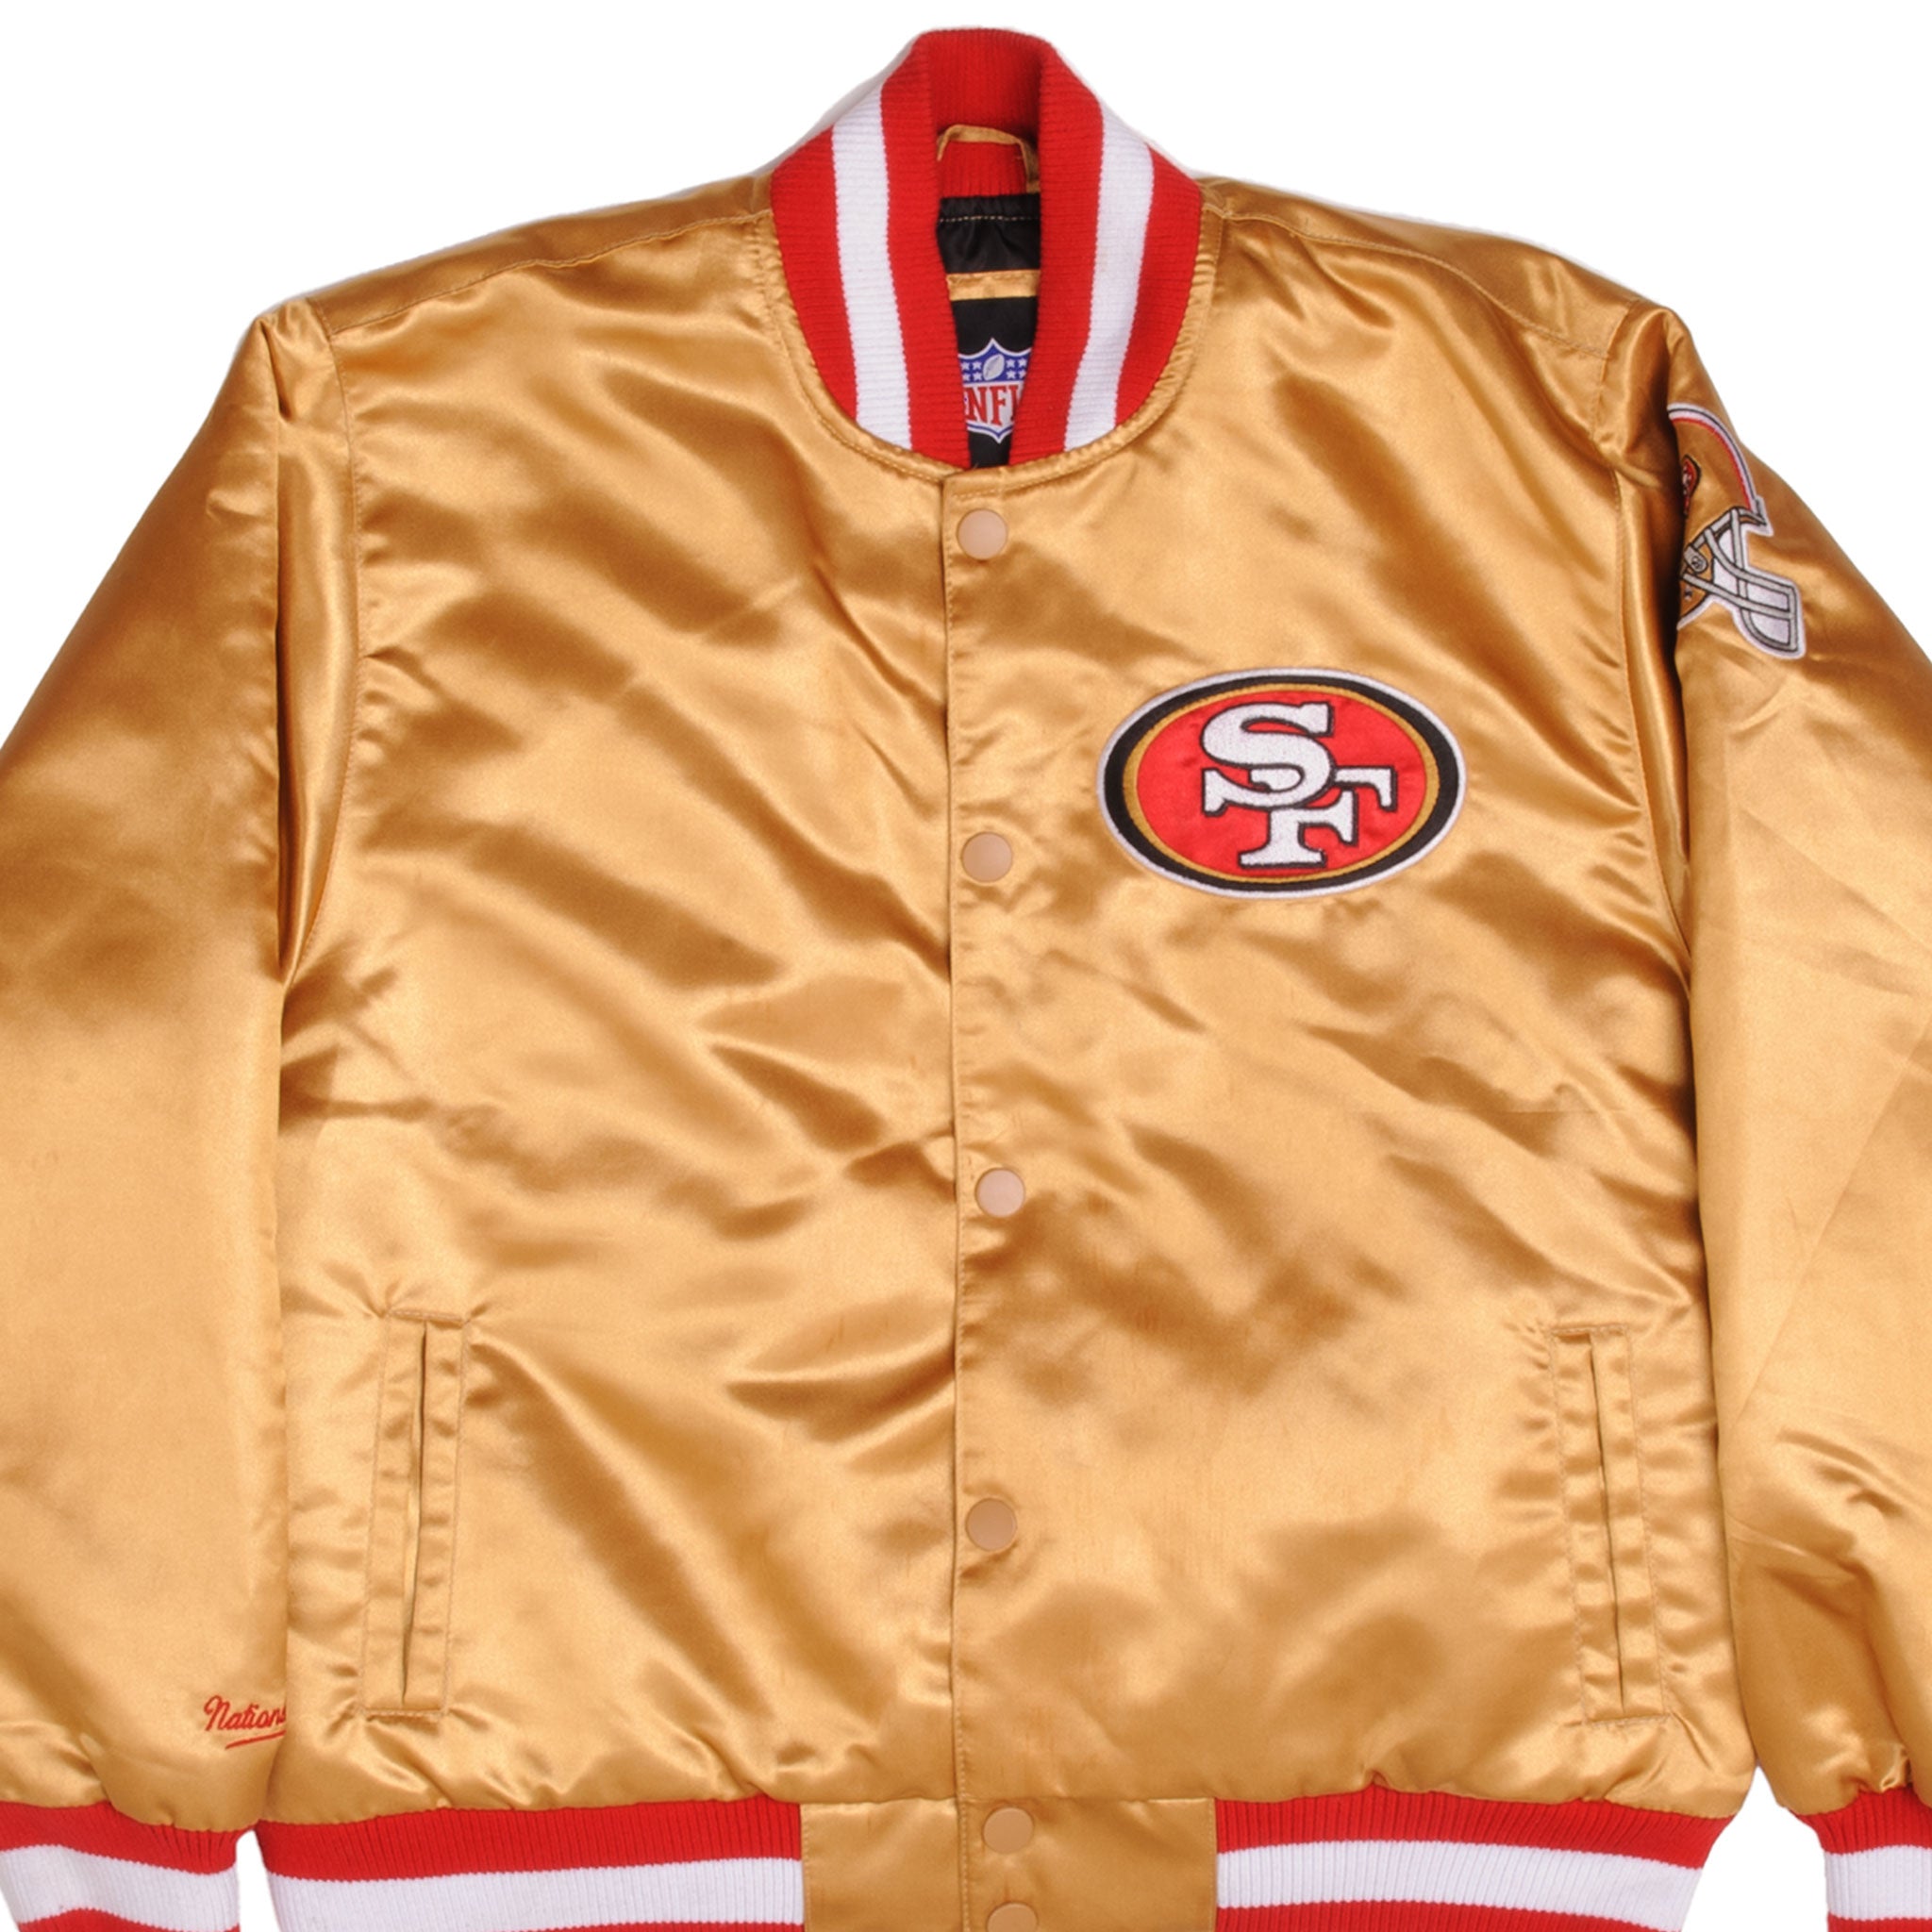 Black Nike NFL San Francisco 49ers Bomber Jacket